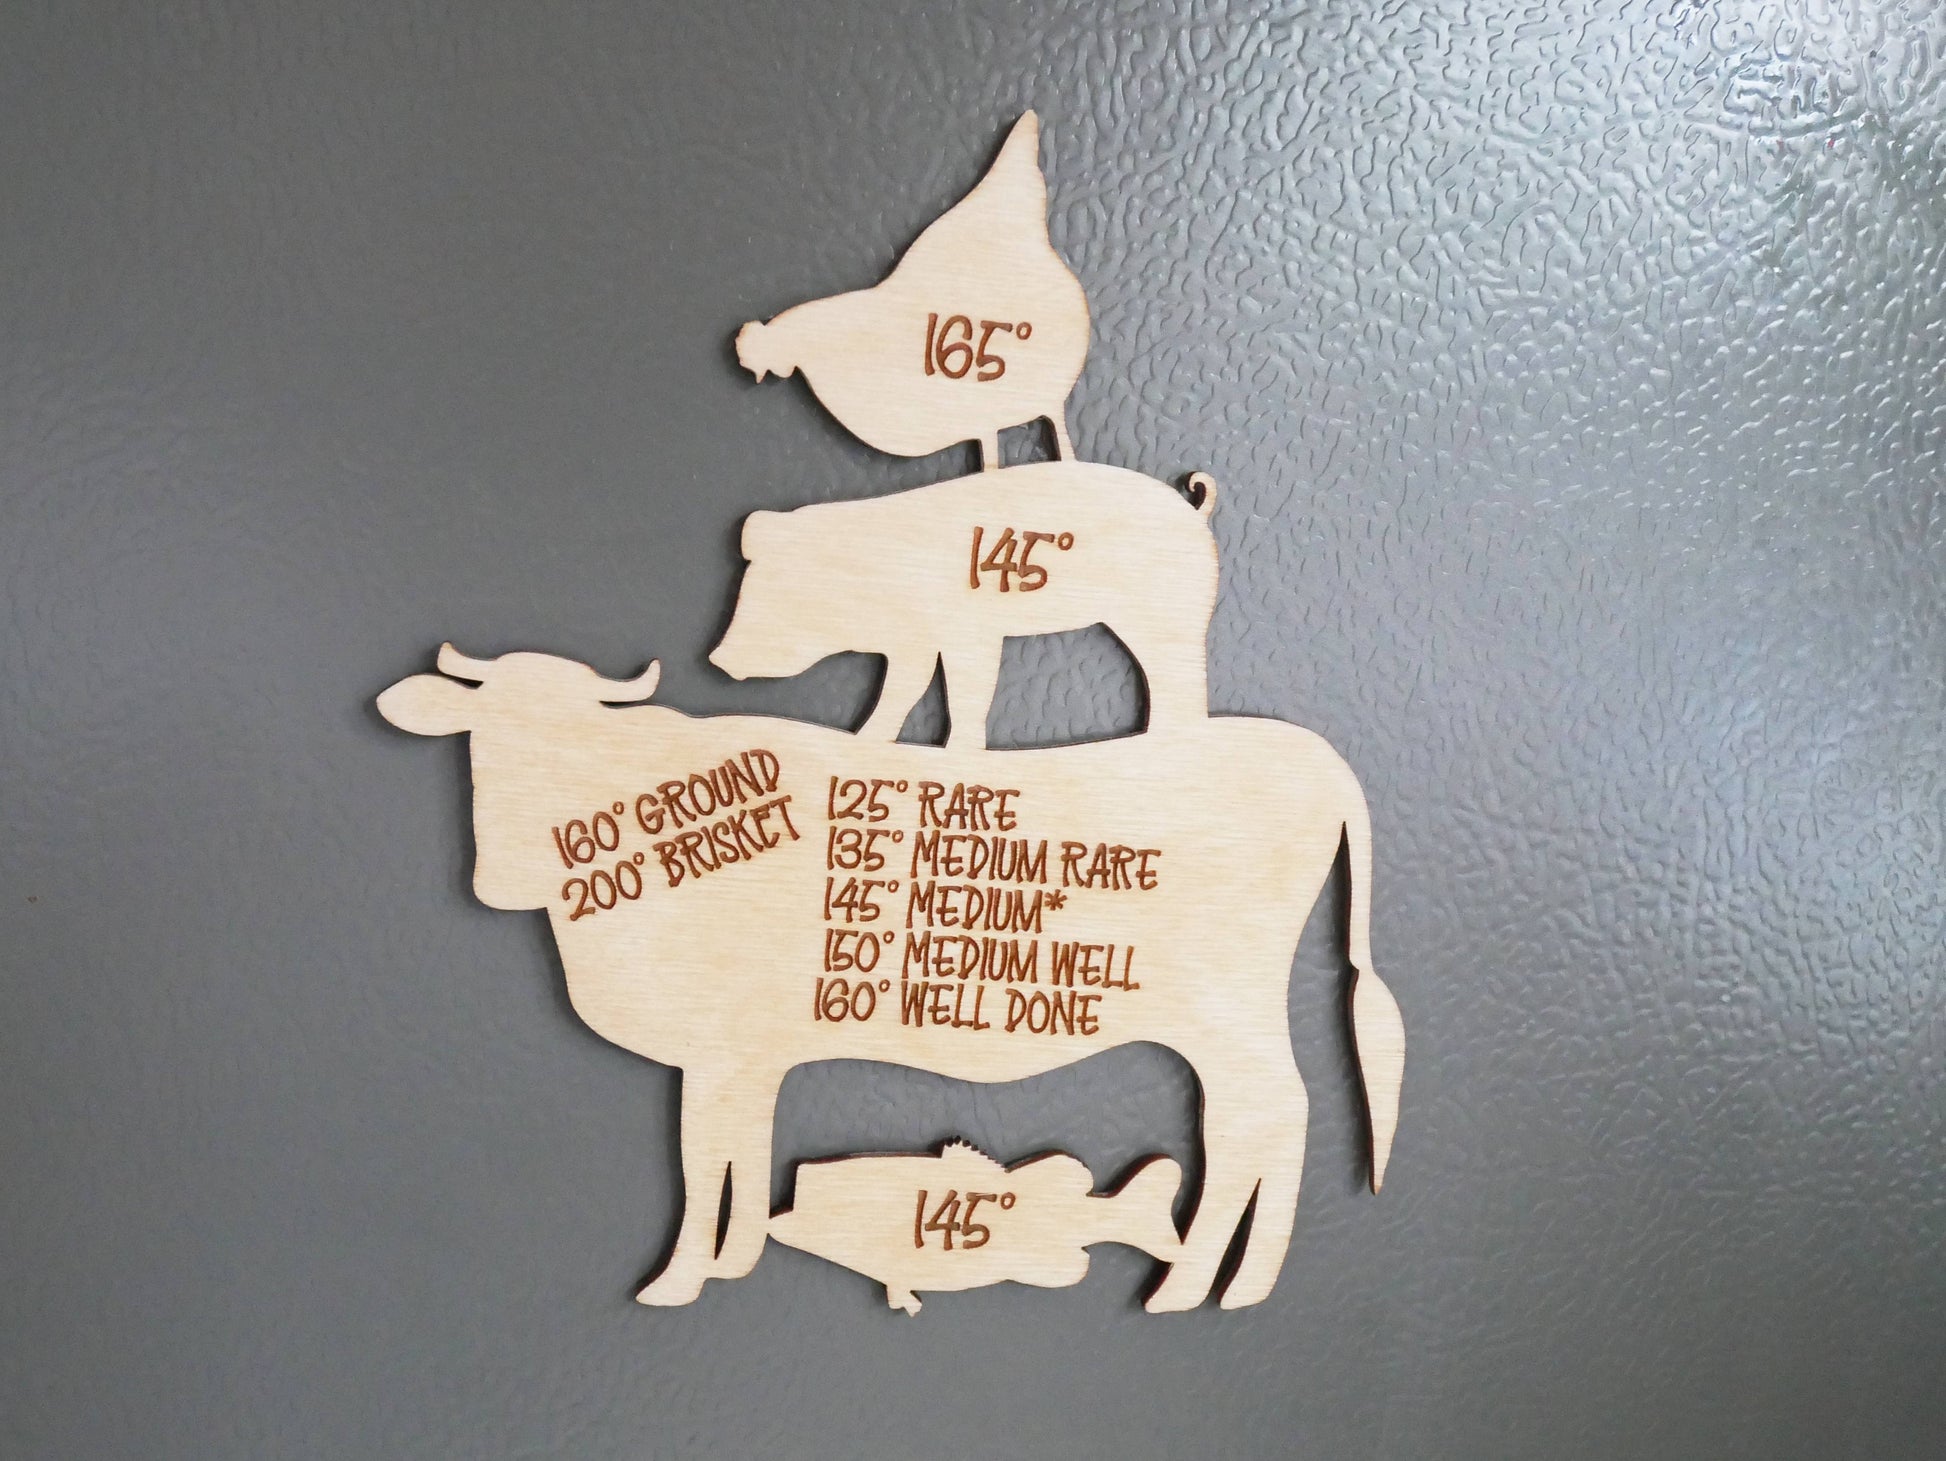 Meat Temperature Guide Magnet